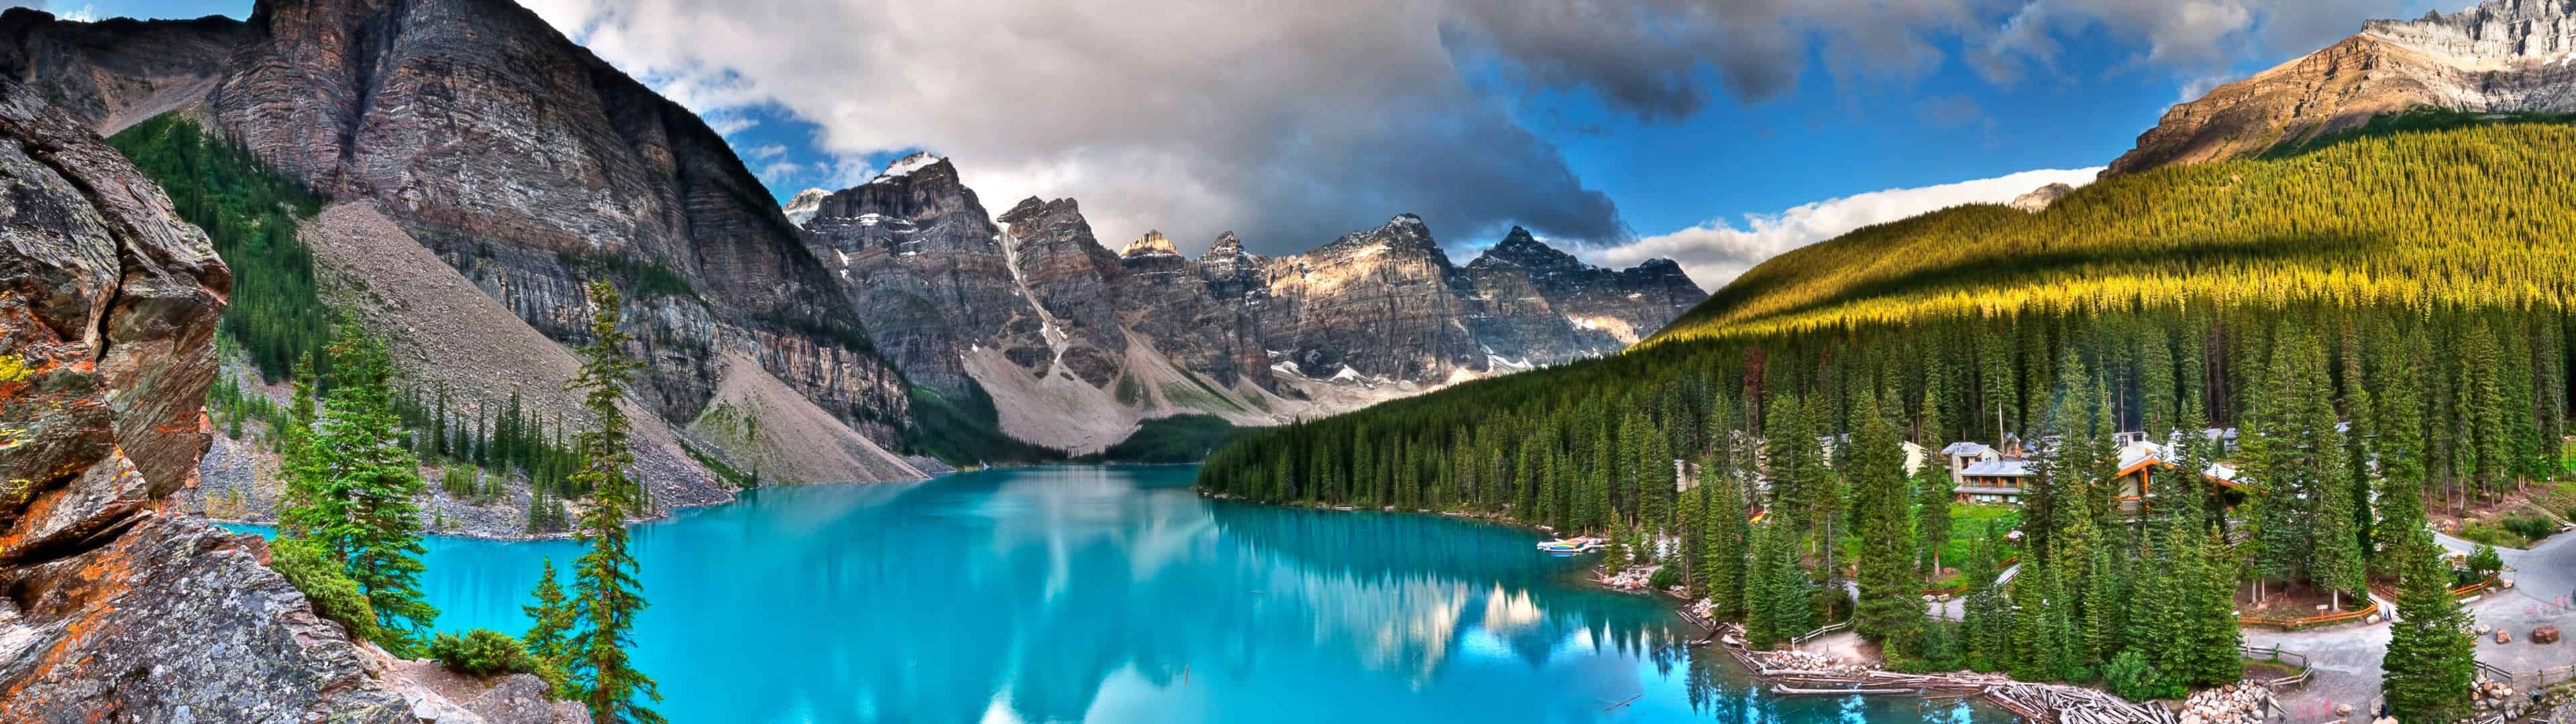 Lake Louise, Moraine Lake, Banff National Park's jewel, Dual monitor wallpaper, 3840x1080 Dual Screen Desktop